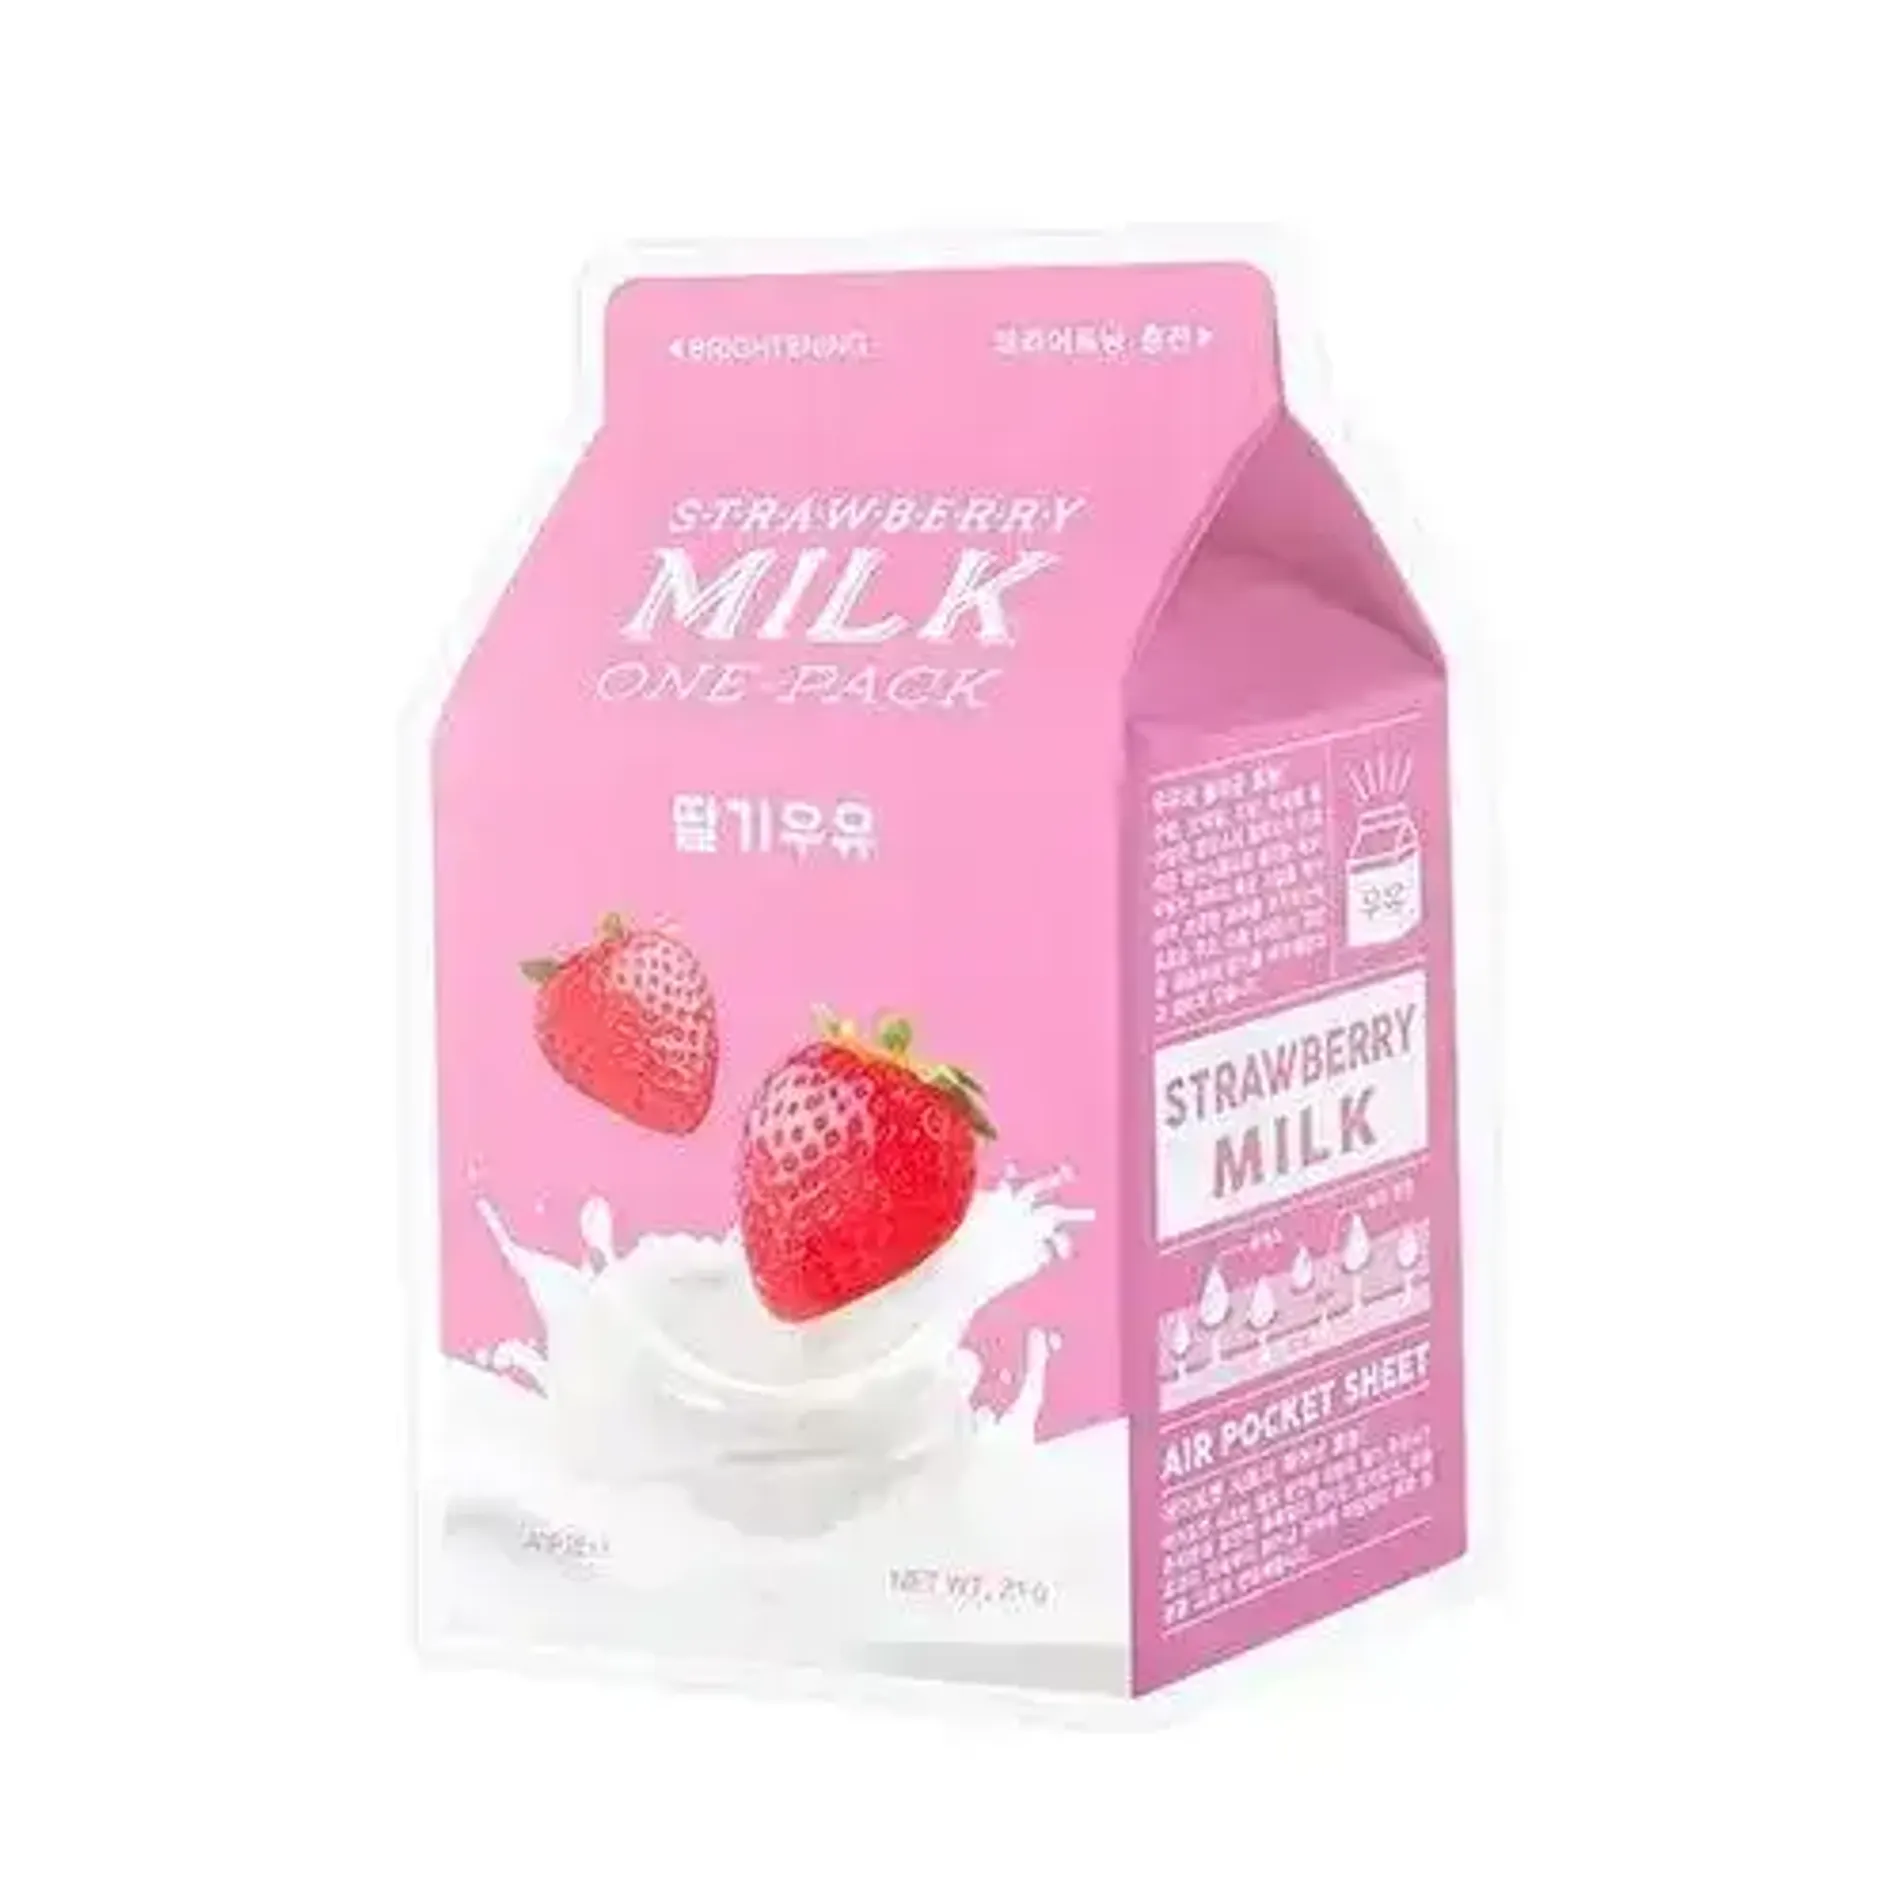 mat-na-giay-lam-sang-da-a-pieu-strawberry-milk-one-pack-1